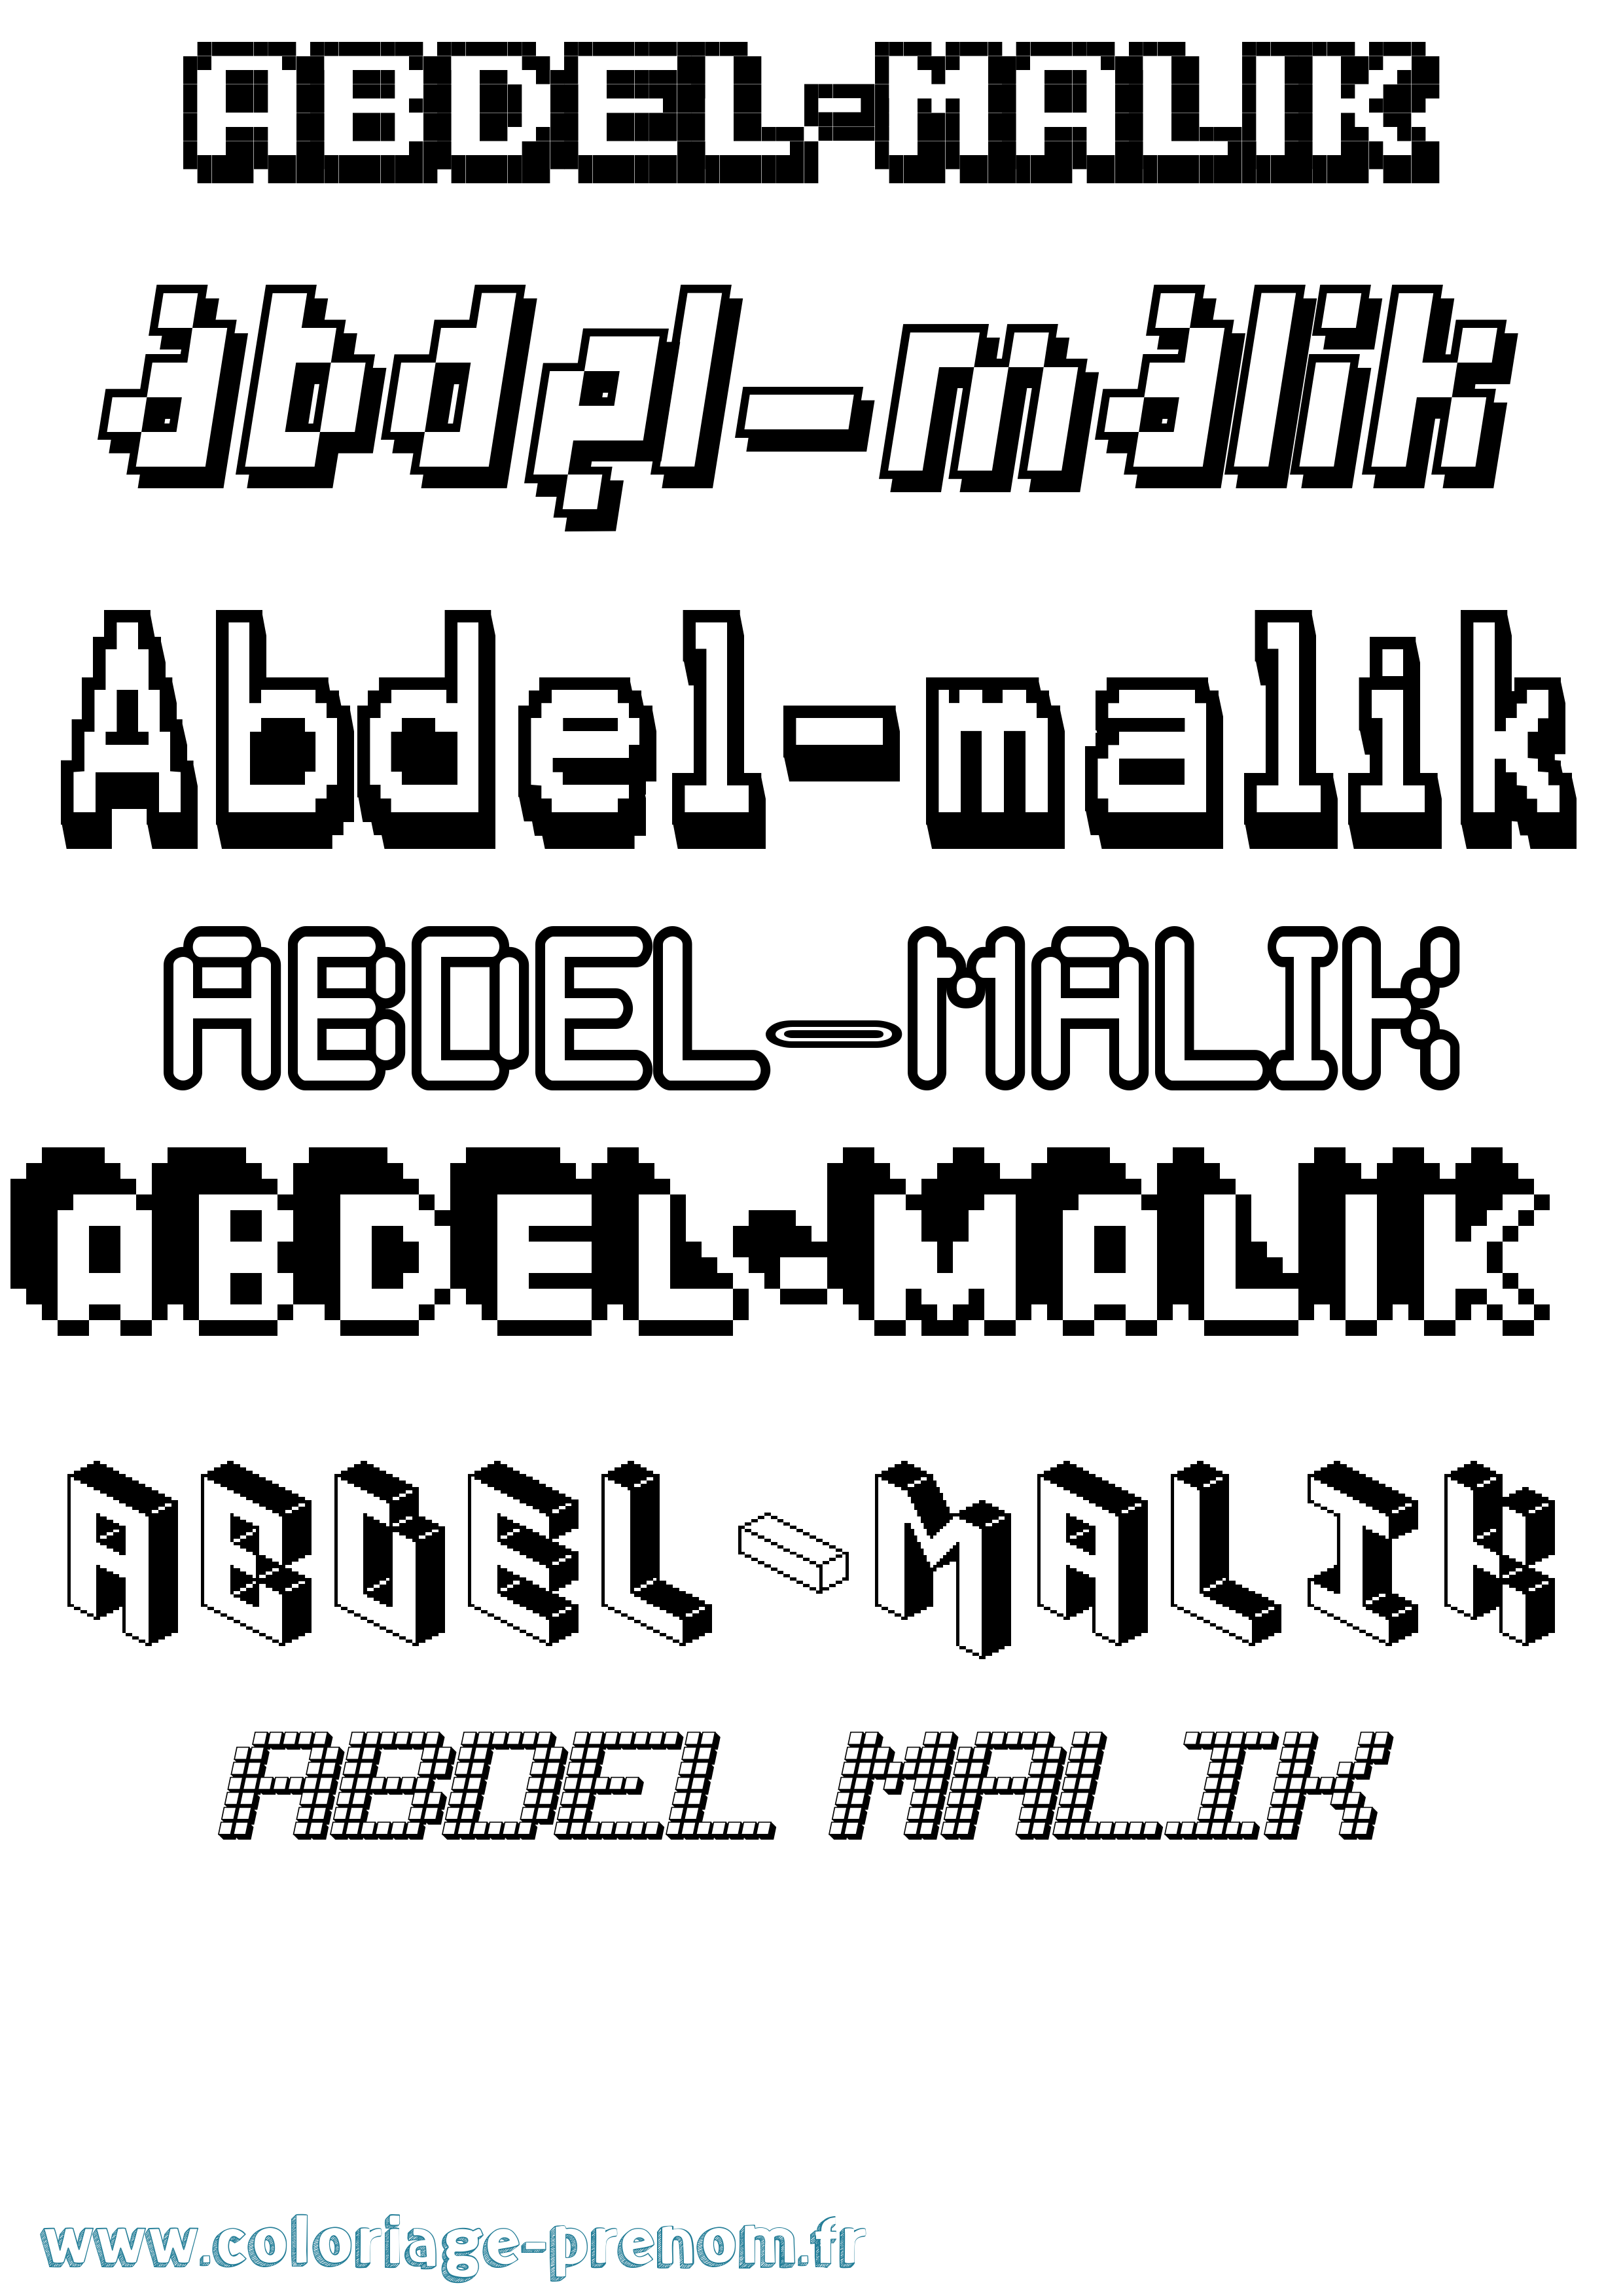 Coloriage prénom Abdel-Malik Pixel